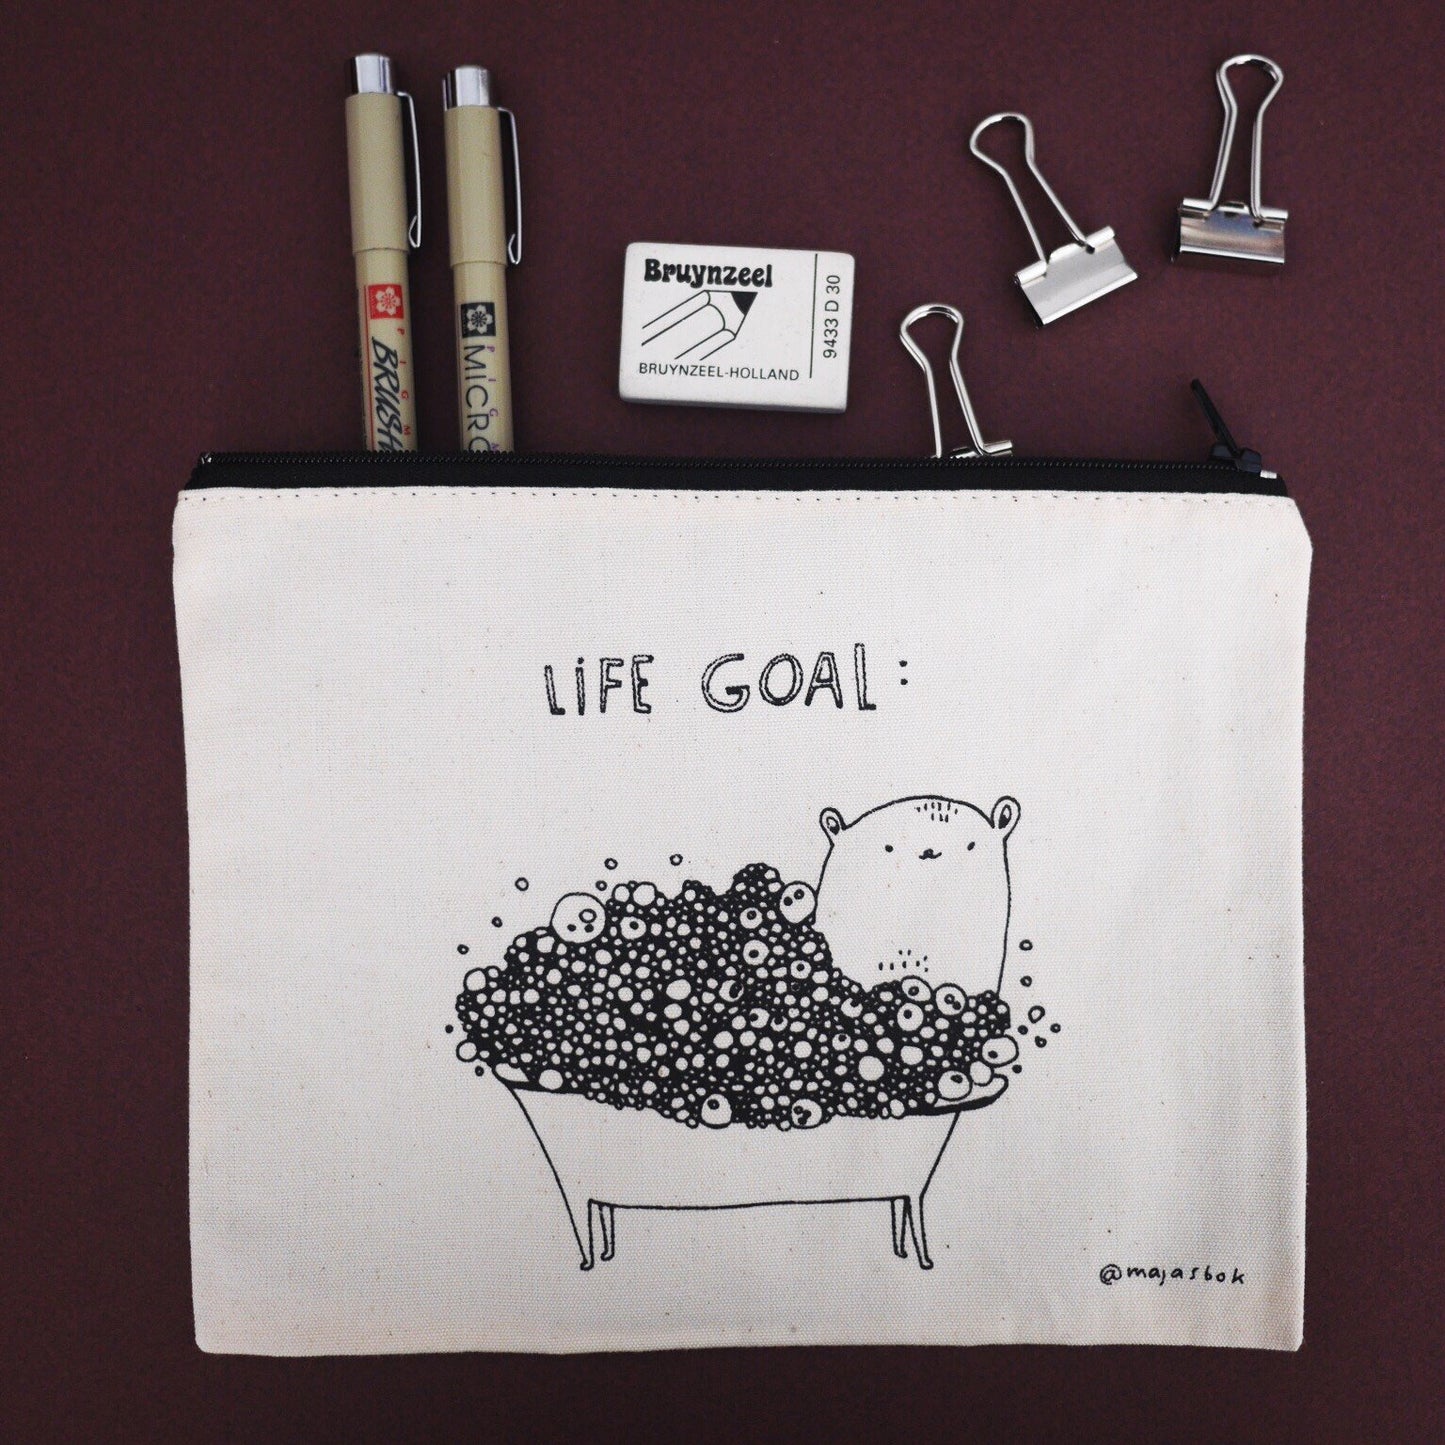 Pouch! "Life goals! "